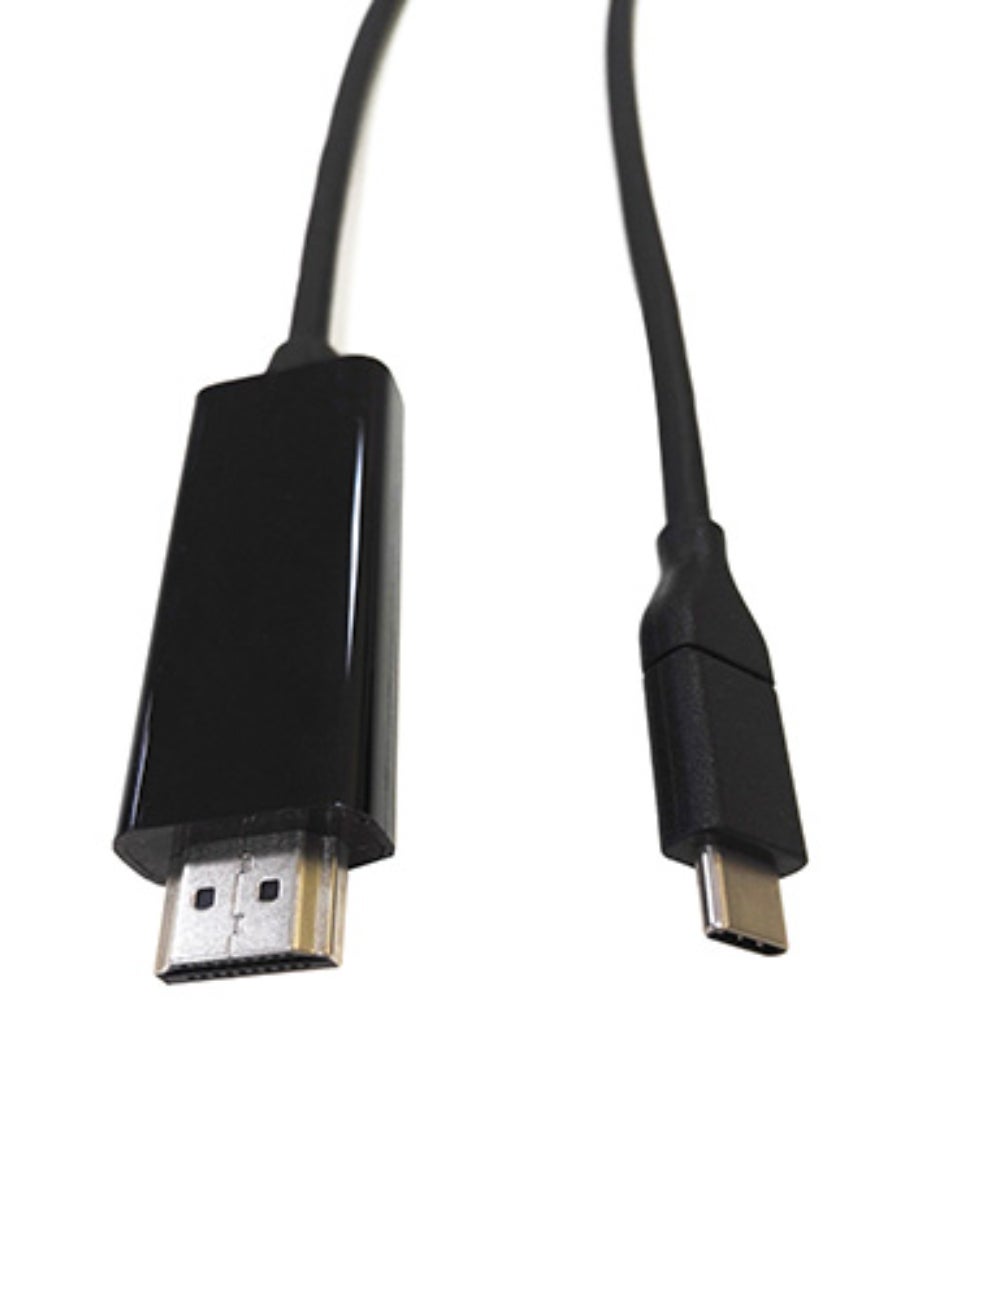 Adaptateur USB Type-C / HDMI pour Samsung Galaxy S8, Galaxy S8+ - 2m